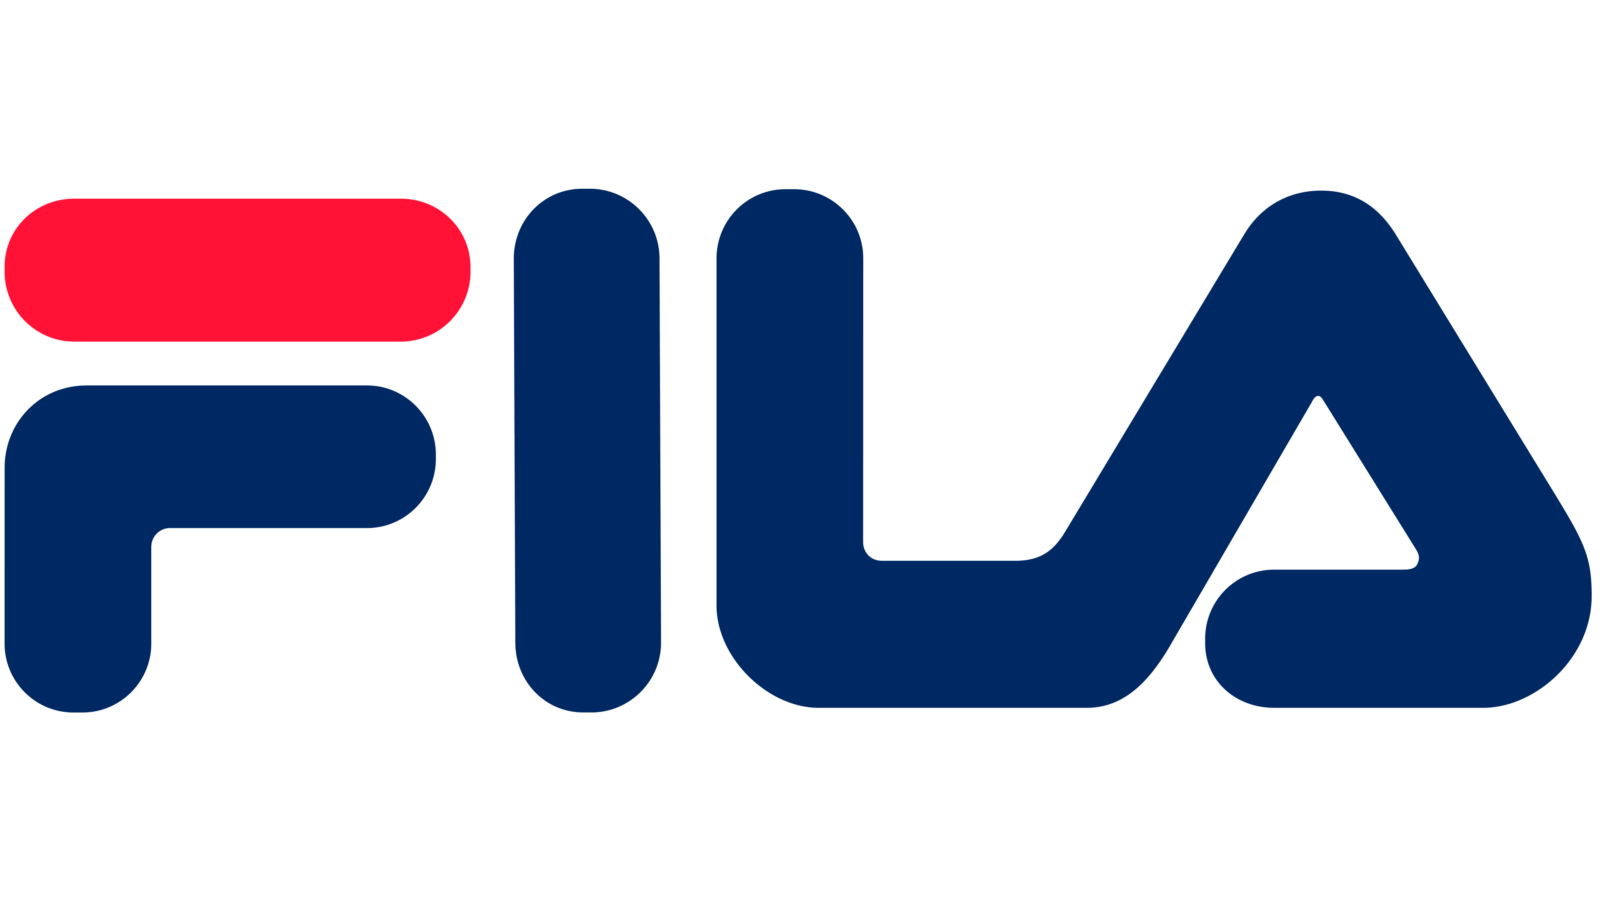 Inspiration - Fila Logo Facts, Meaning, History & PNG - LogoCharts ...